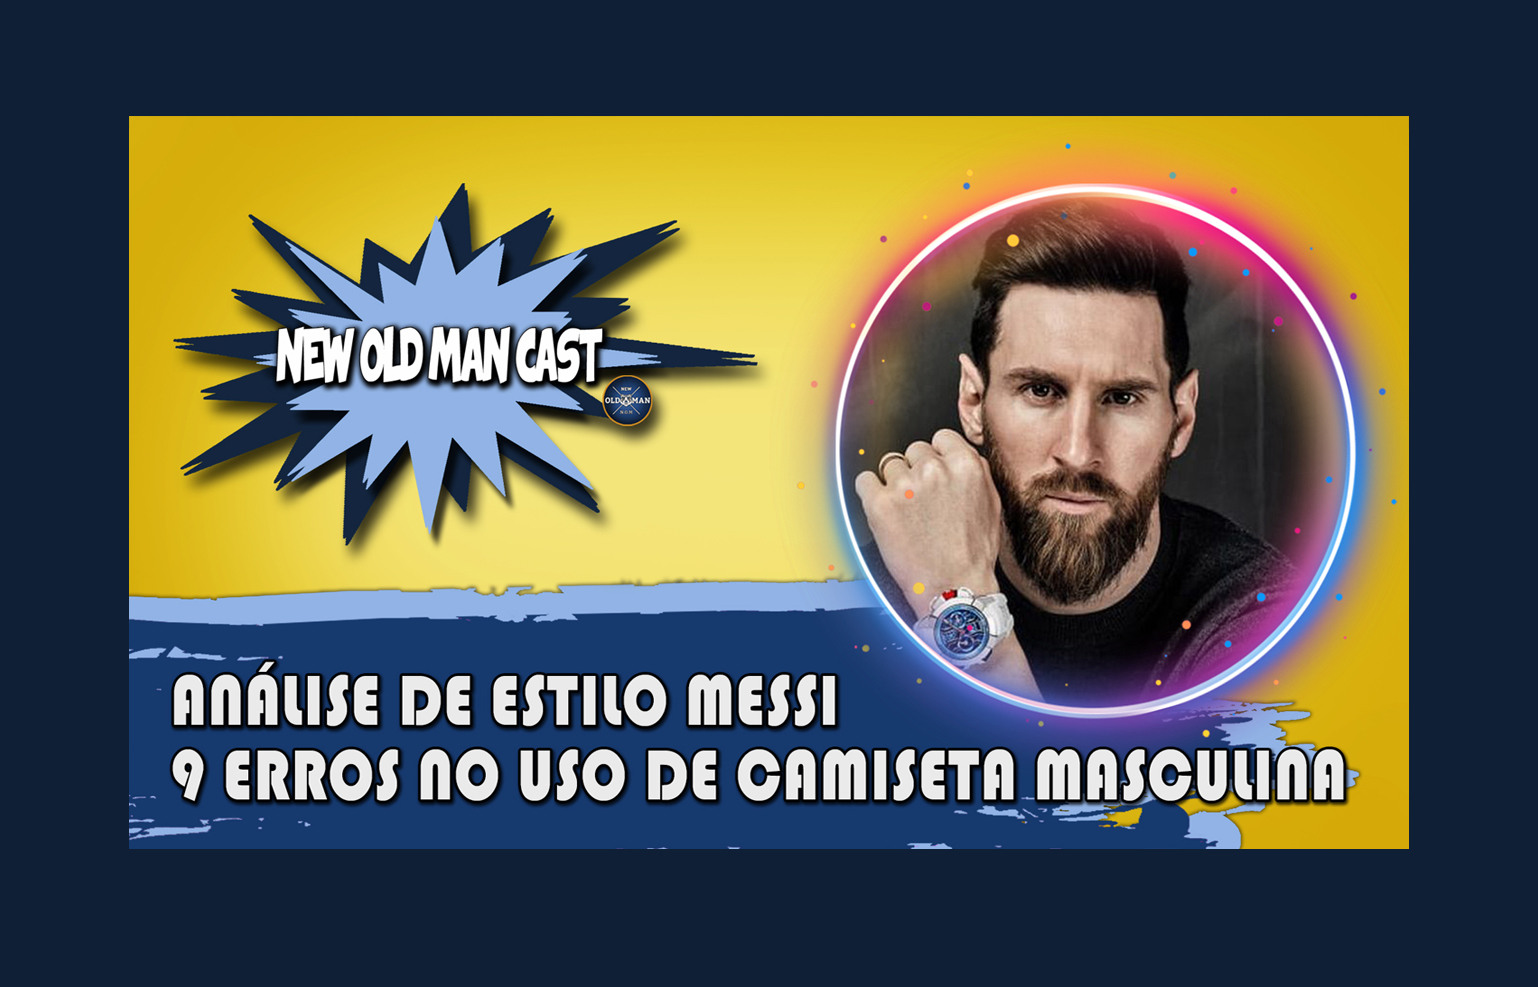 New Old Man Cast #40 - 9 Erros No Uso De Camiseta Masculina - Análise de Estilo Lionel Messi